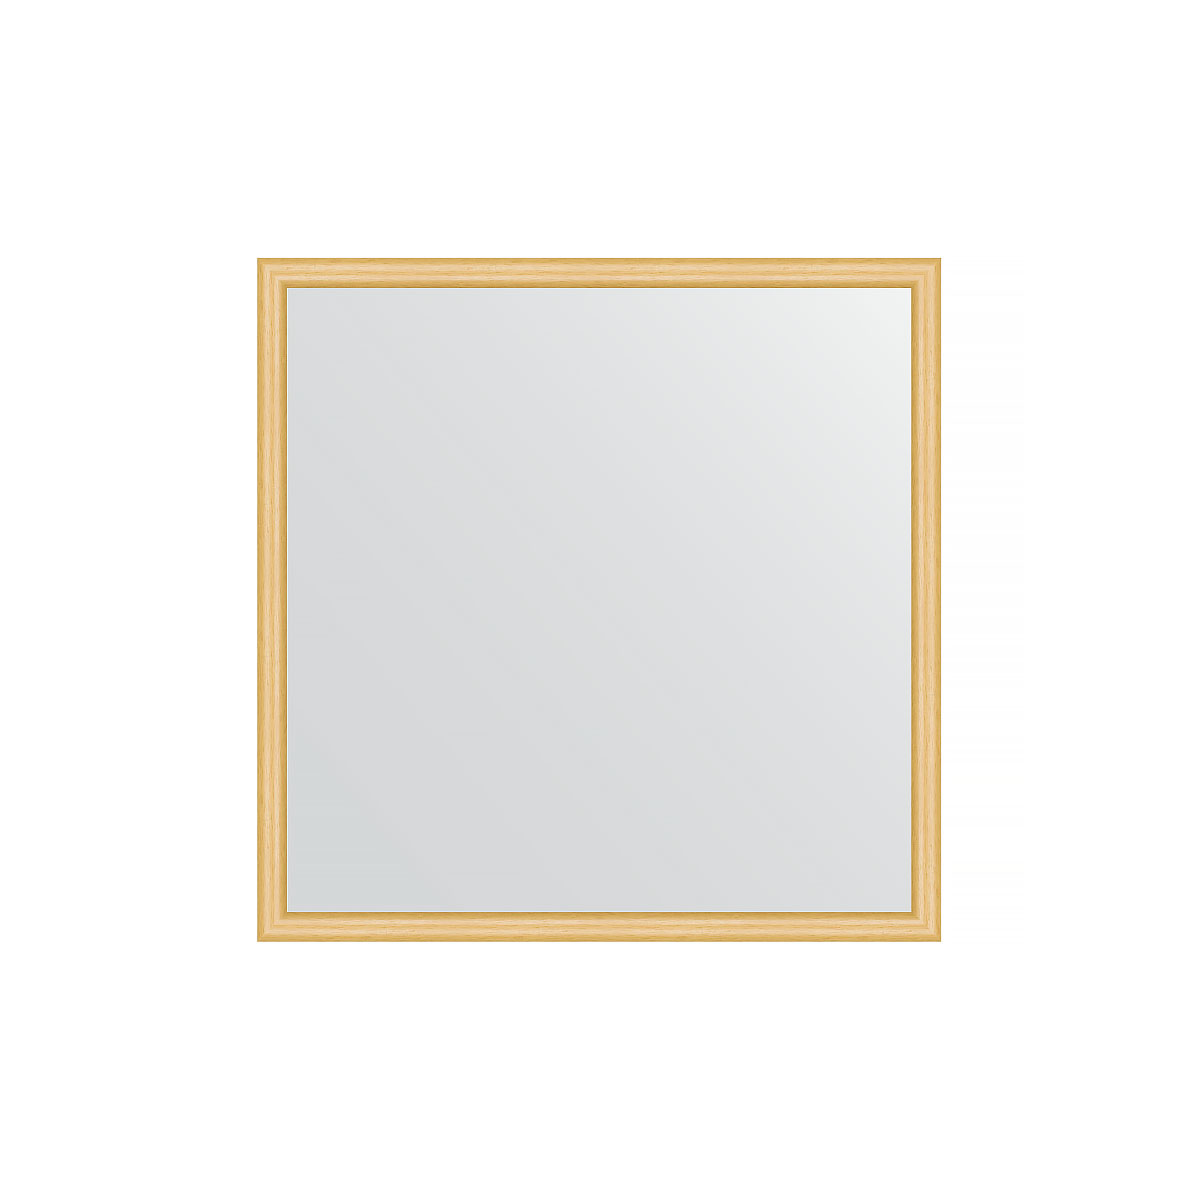 Зеркало в багетной раме Evoform сосна 22 мм 58х58 см зеркало 58х58 см вишня evoform definite by 0602